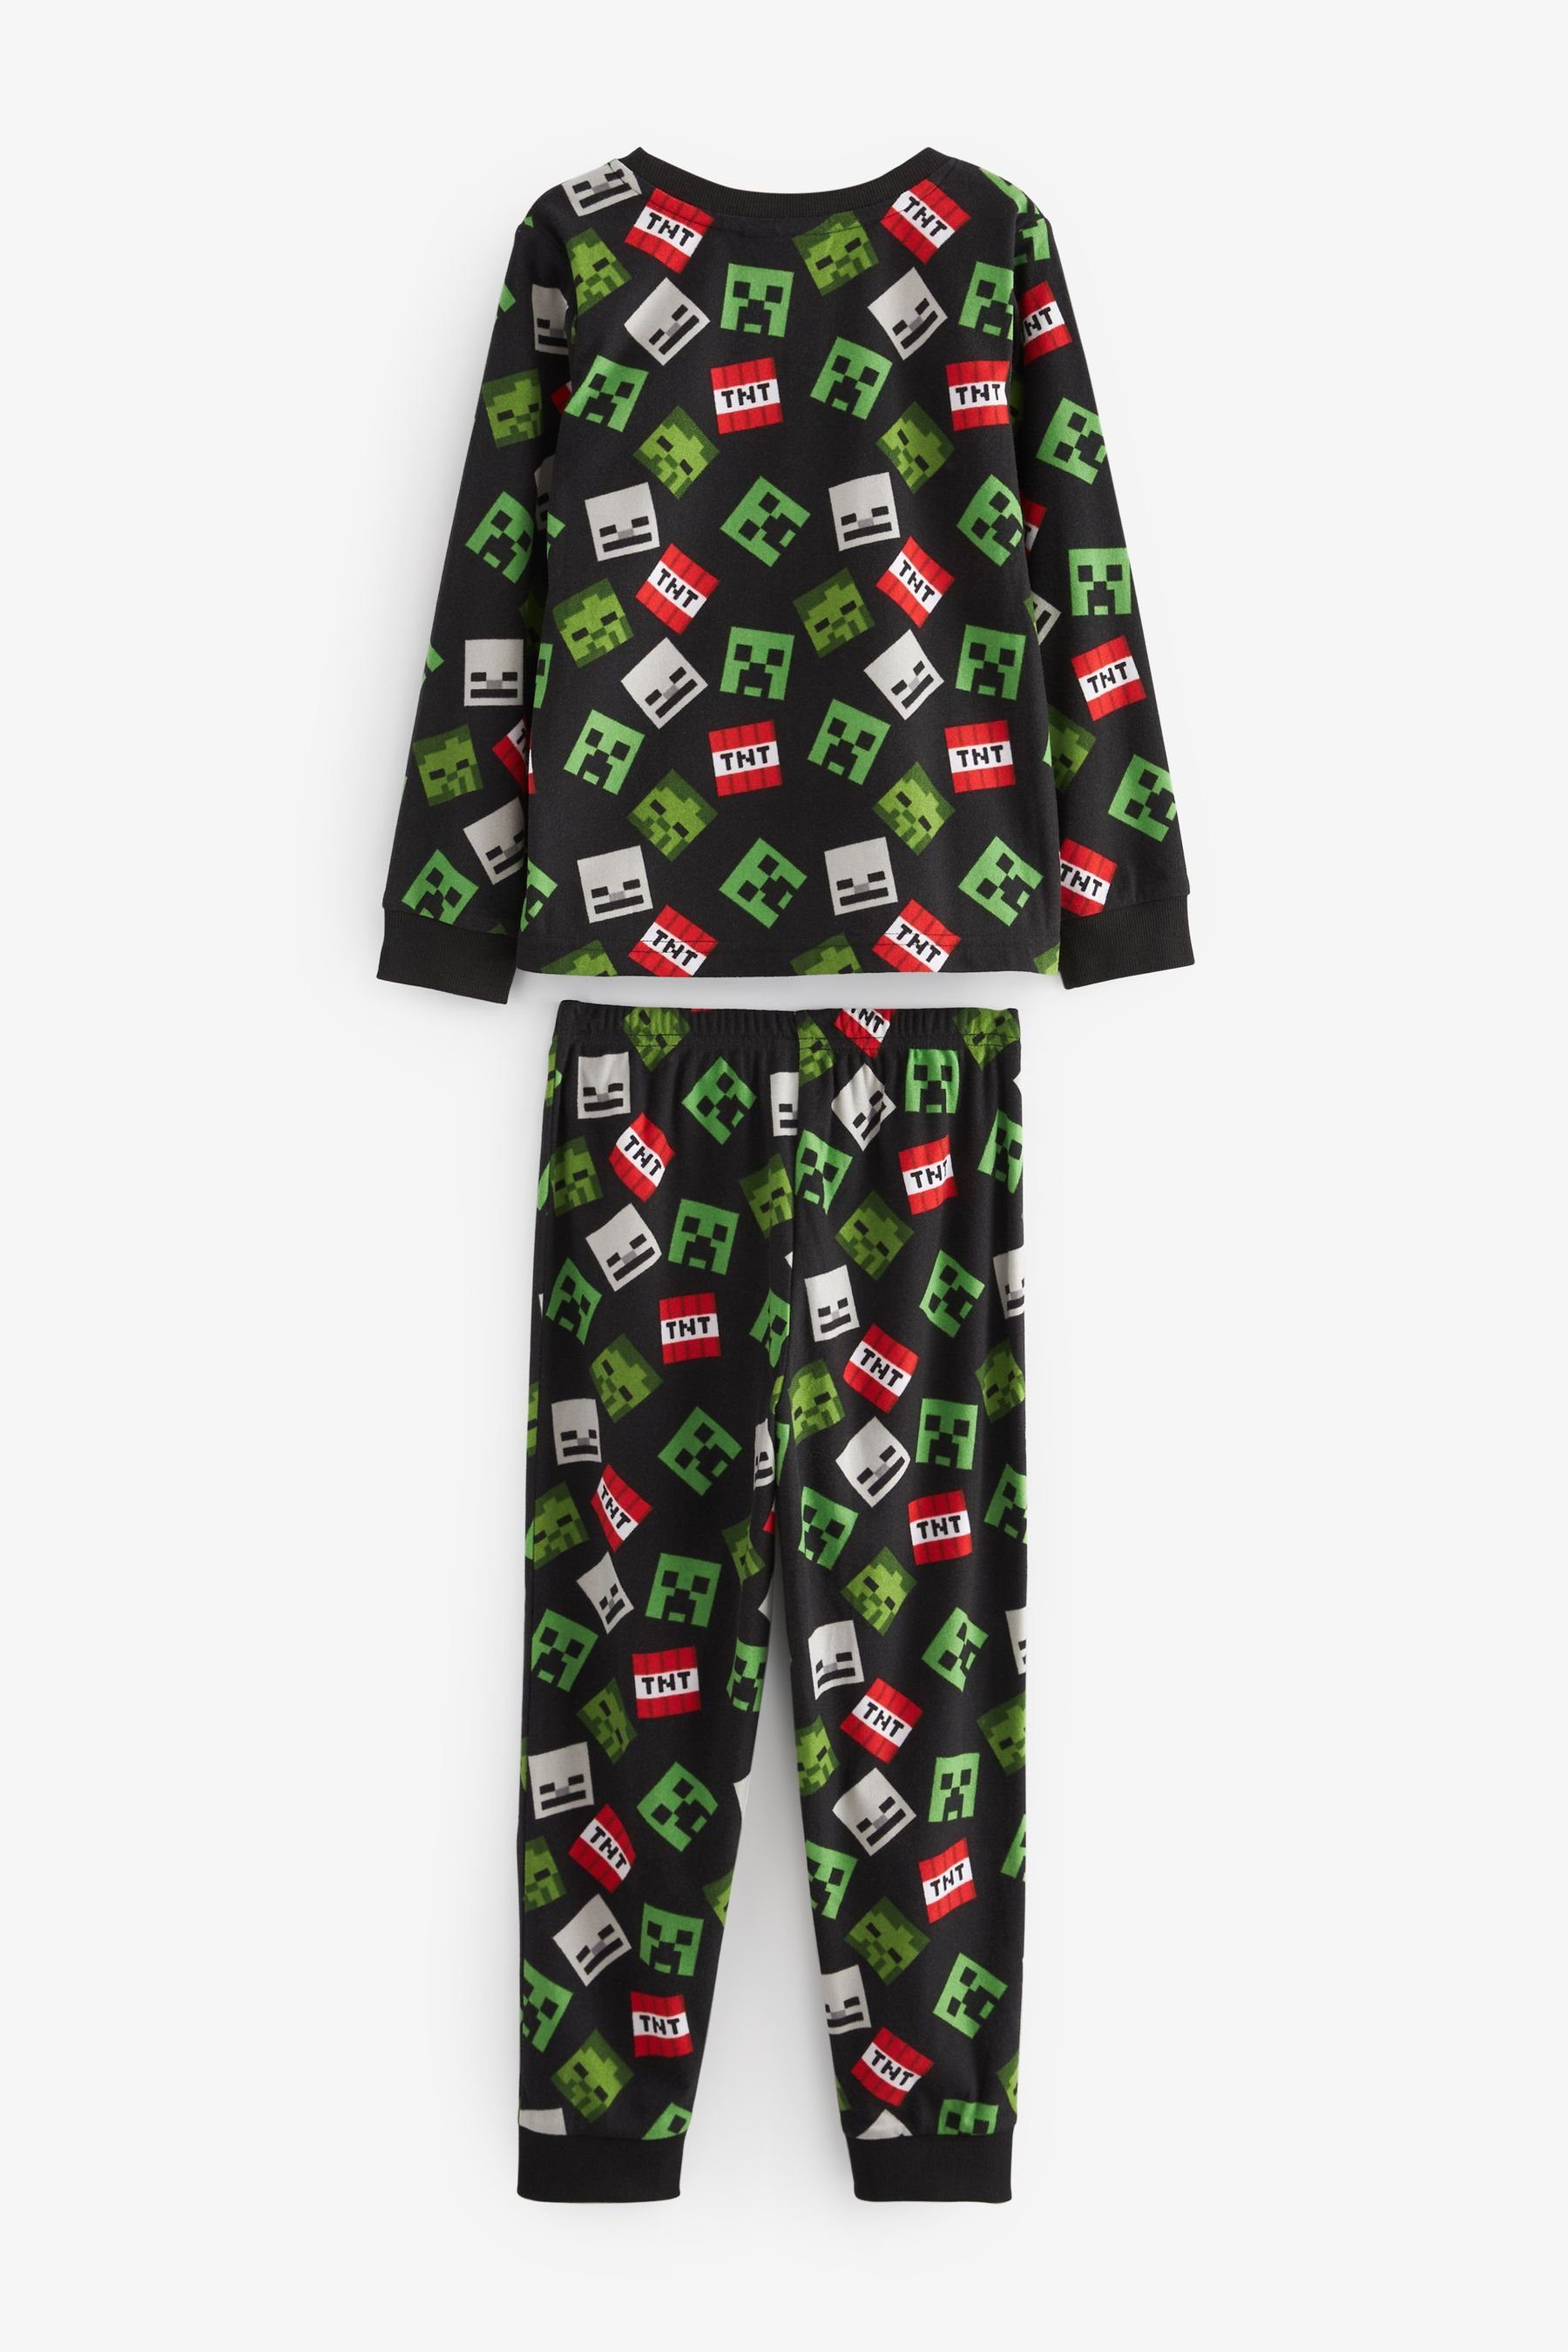 Next Pyjama Elasthan (2 mit Minecraft aus Black/Green Pyjamas weichem tlg) Fleece